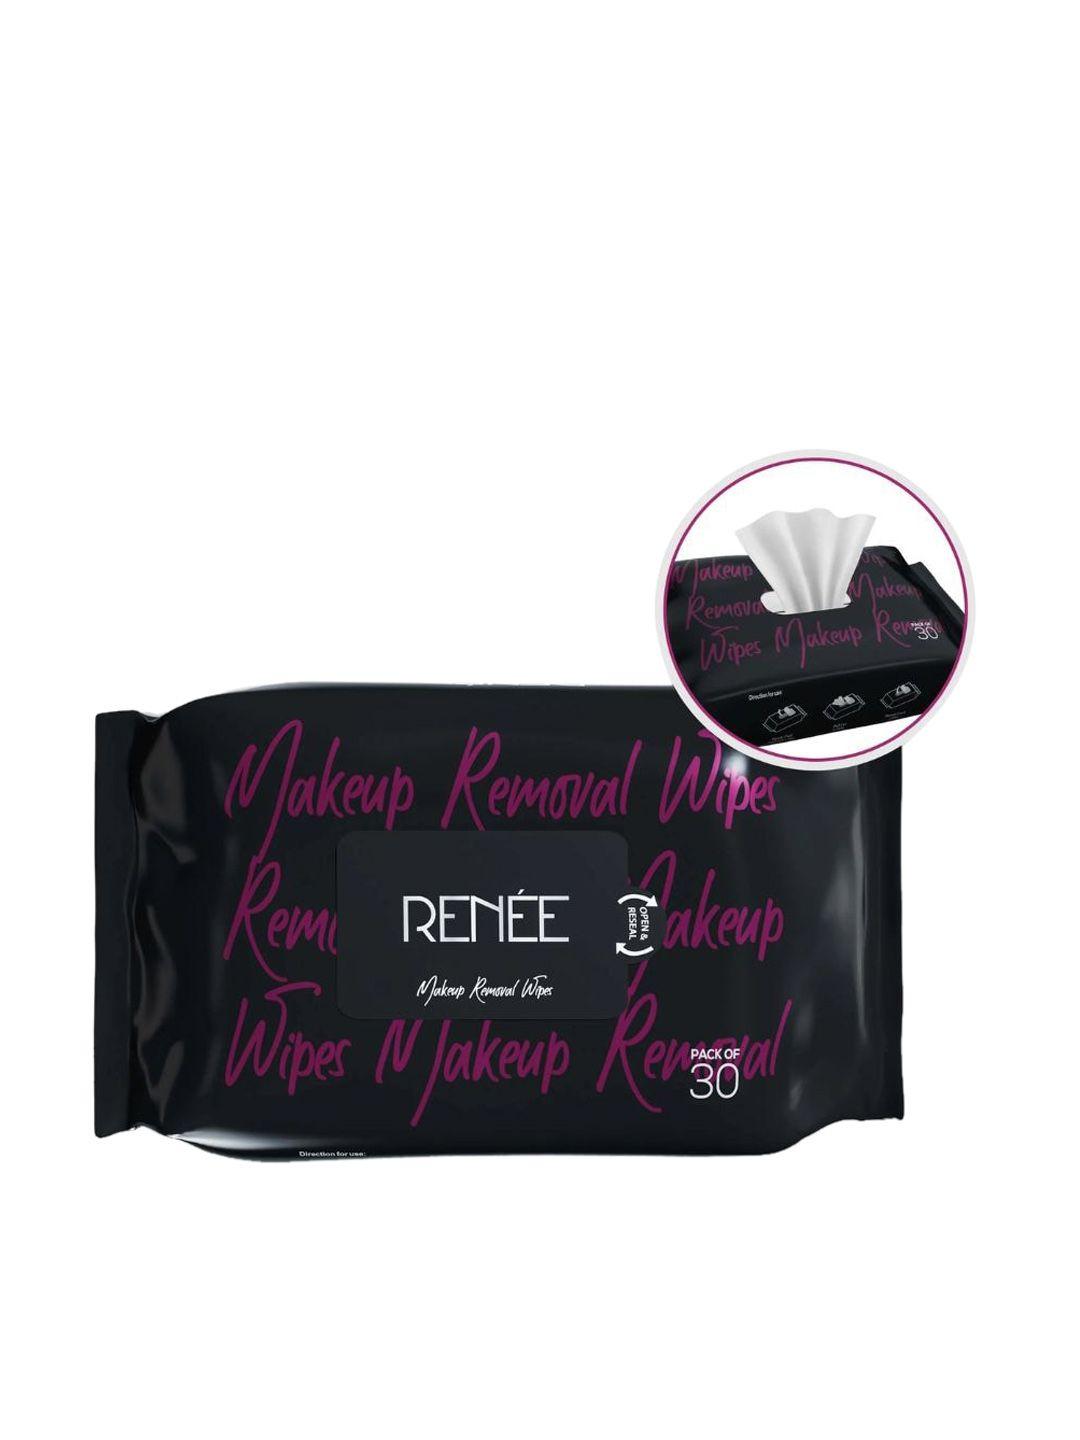 renee makeup removal wipes - 30 wipes